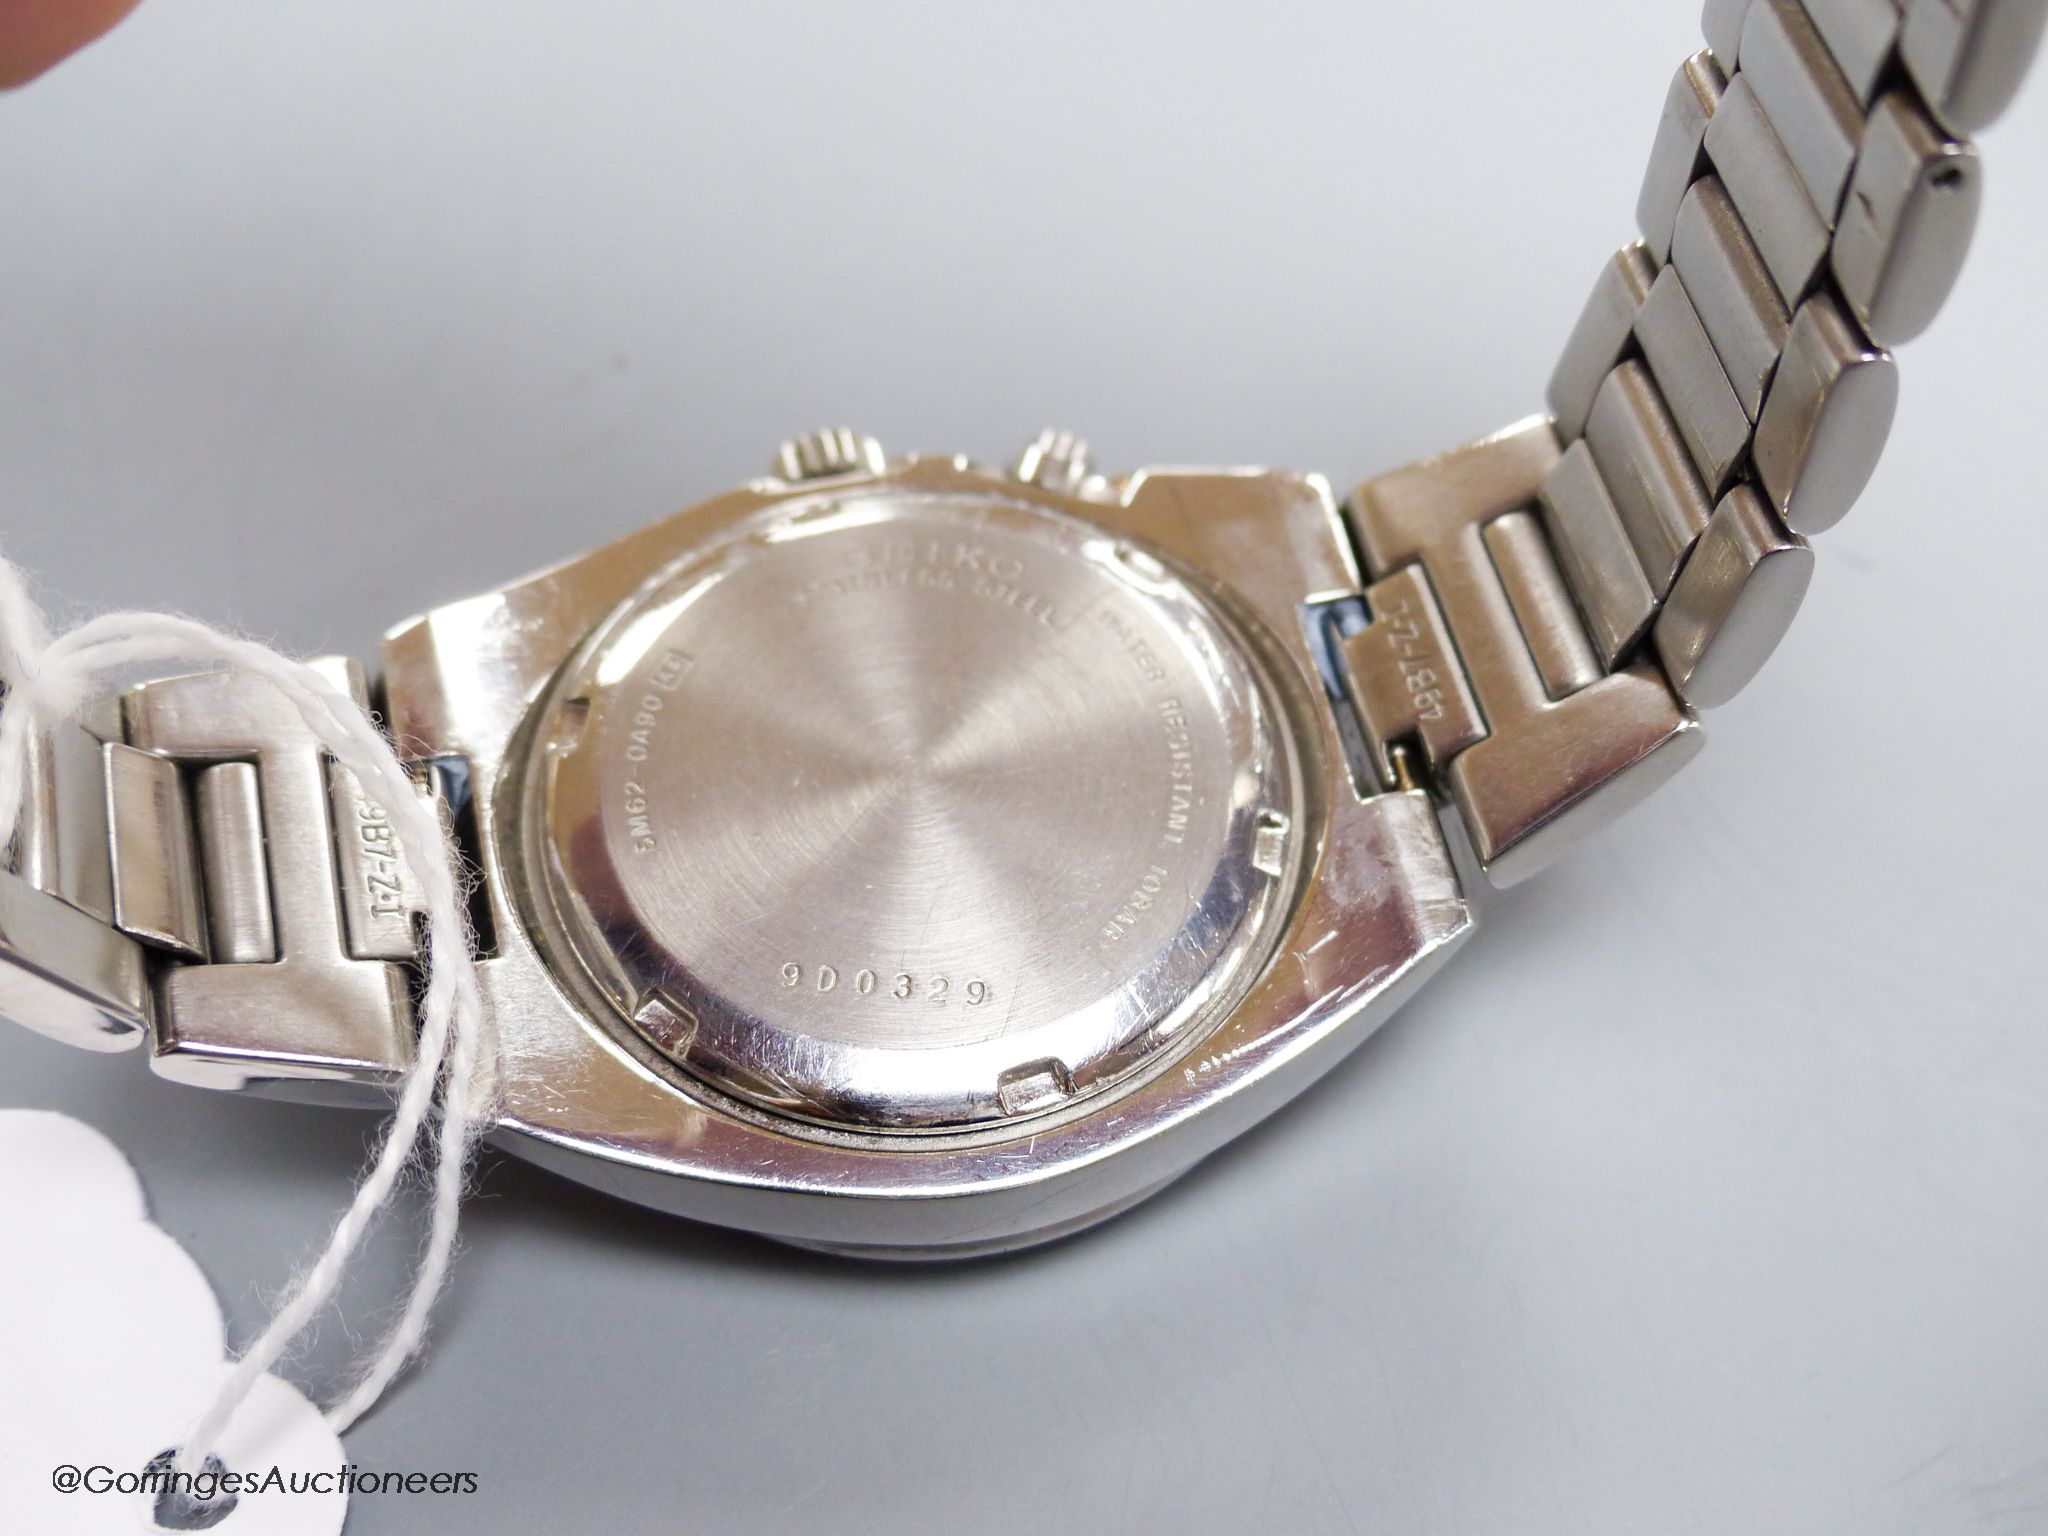 A gentleman's modern stainless steel Seiko Kinetic Waterproof 100M wrist watch, with blue dial, on stainless steel Seiko bracelet, case diameter 39mm excl. crown.